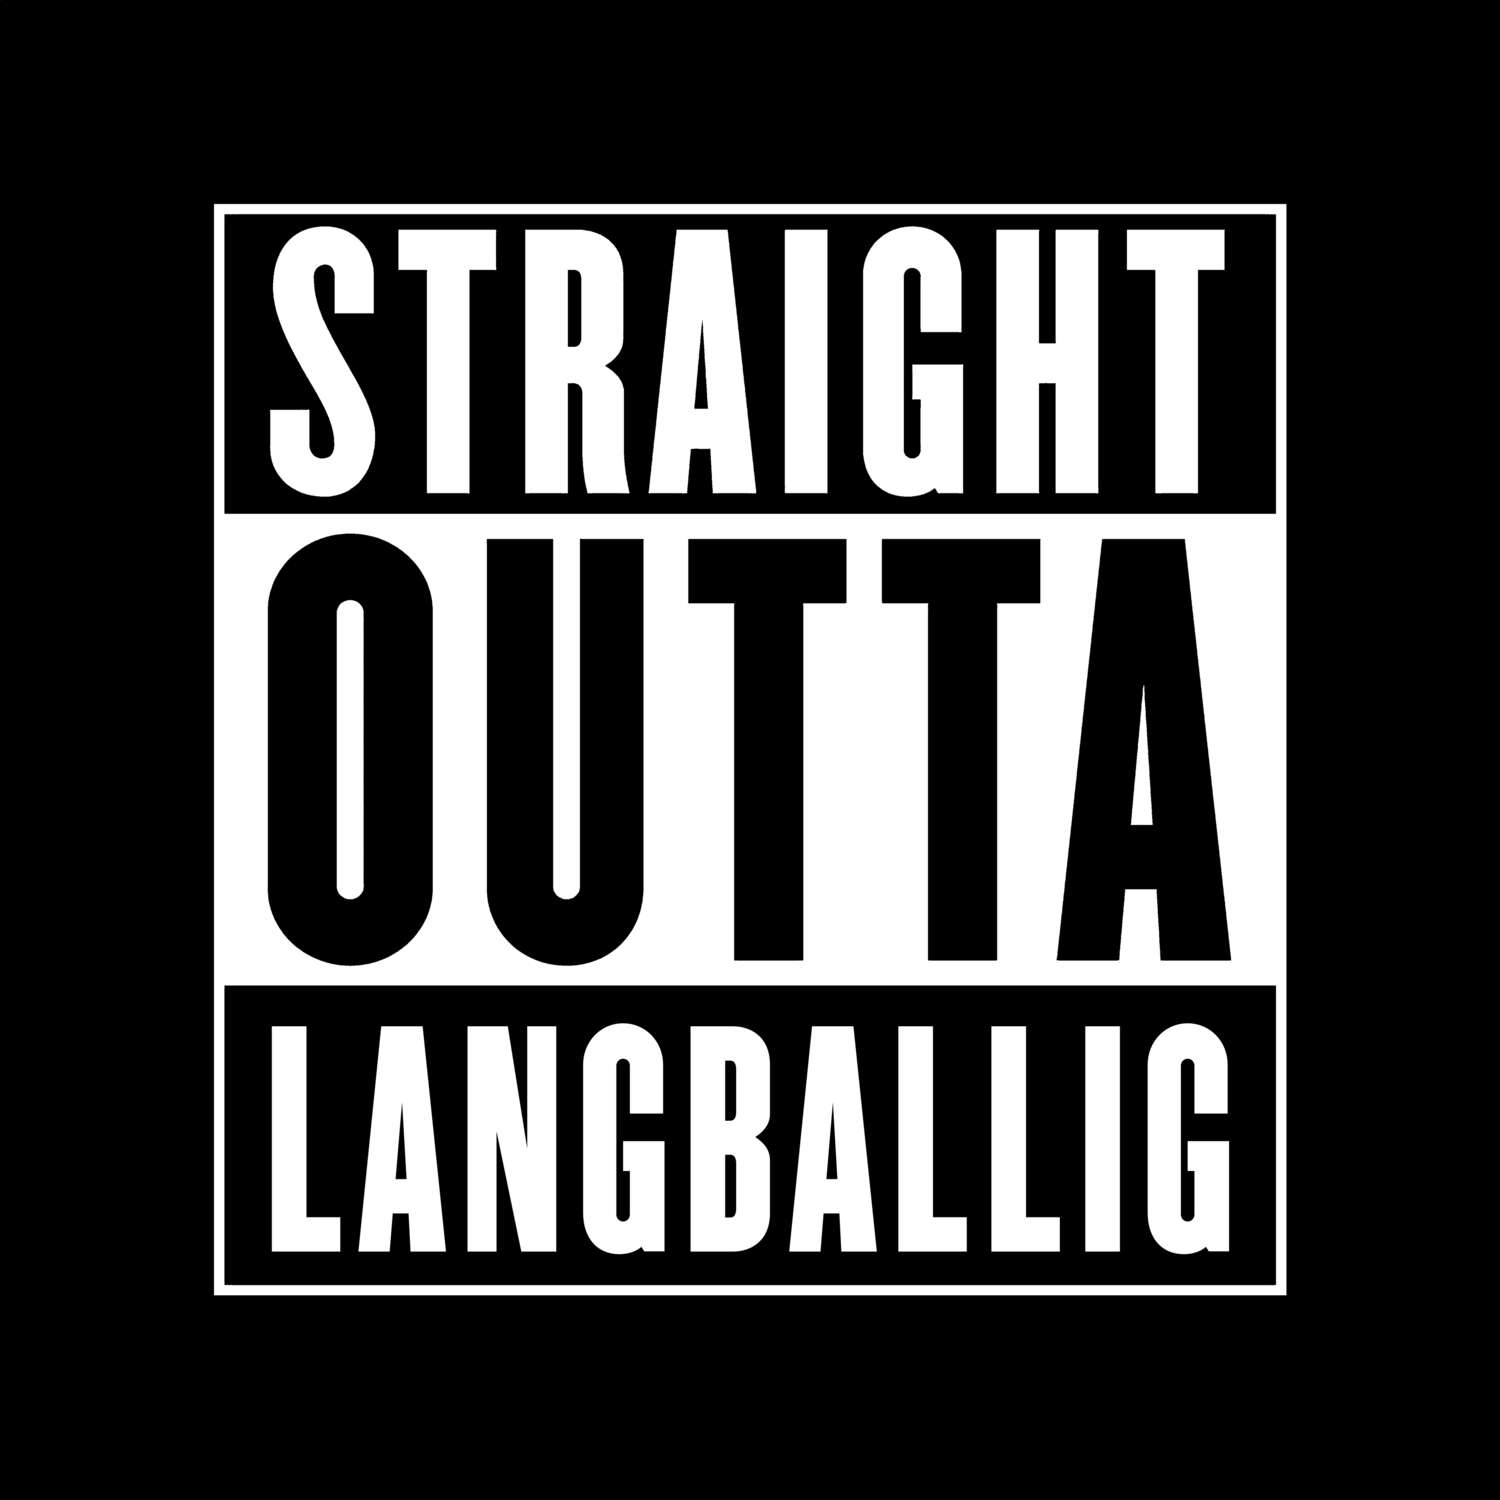 Langballig T-Shirt »Straight Outta«